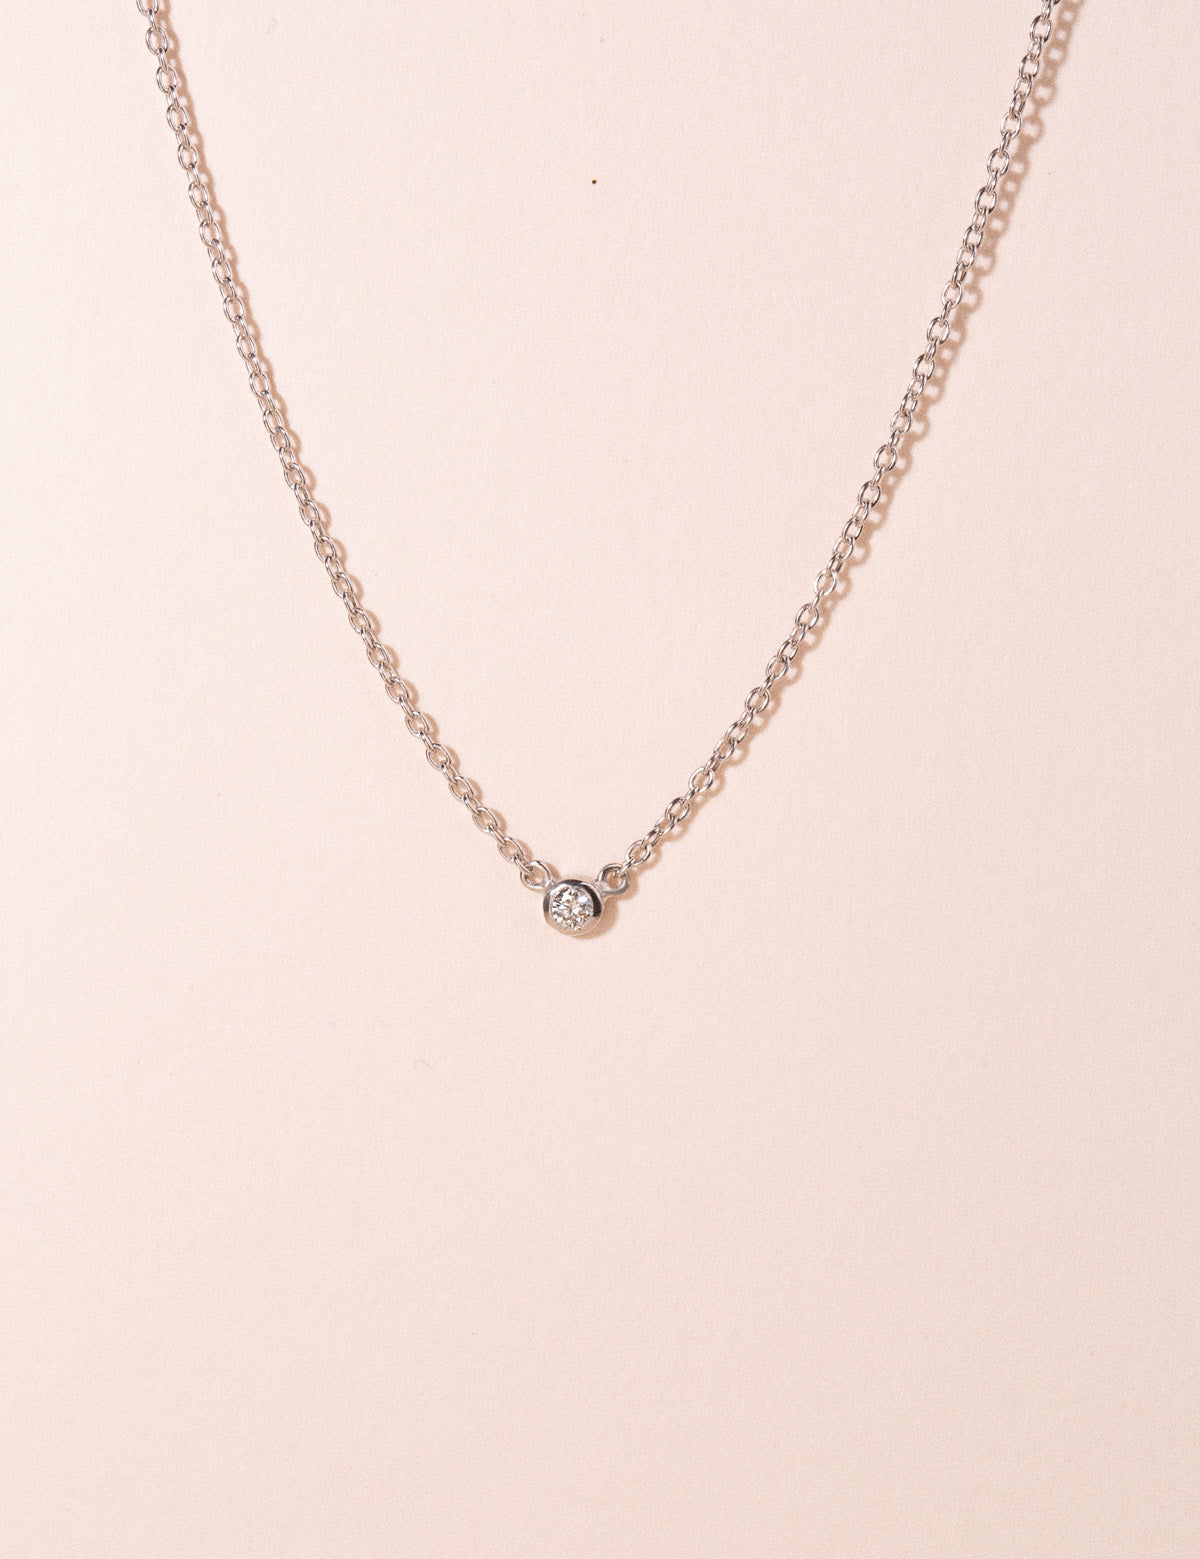 Single diamond necklace petite